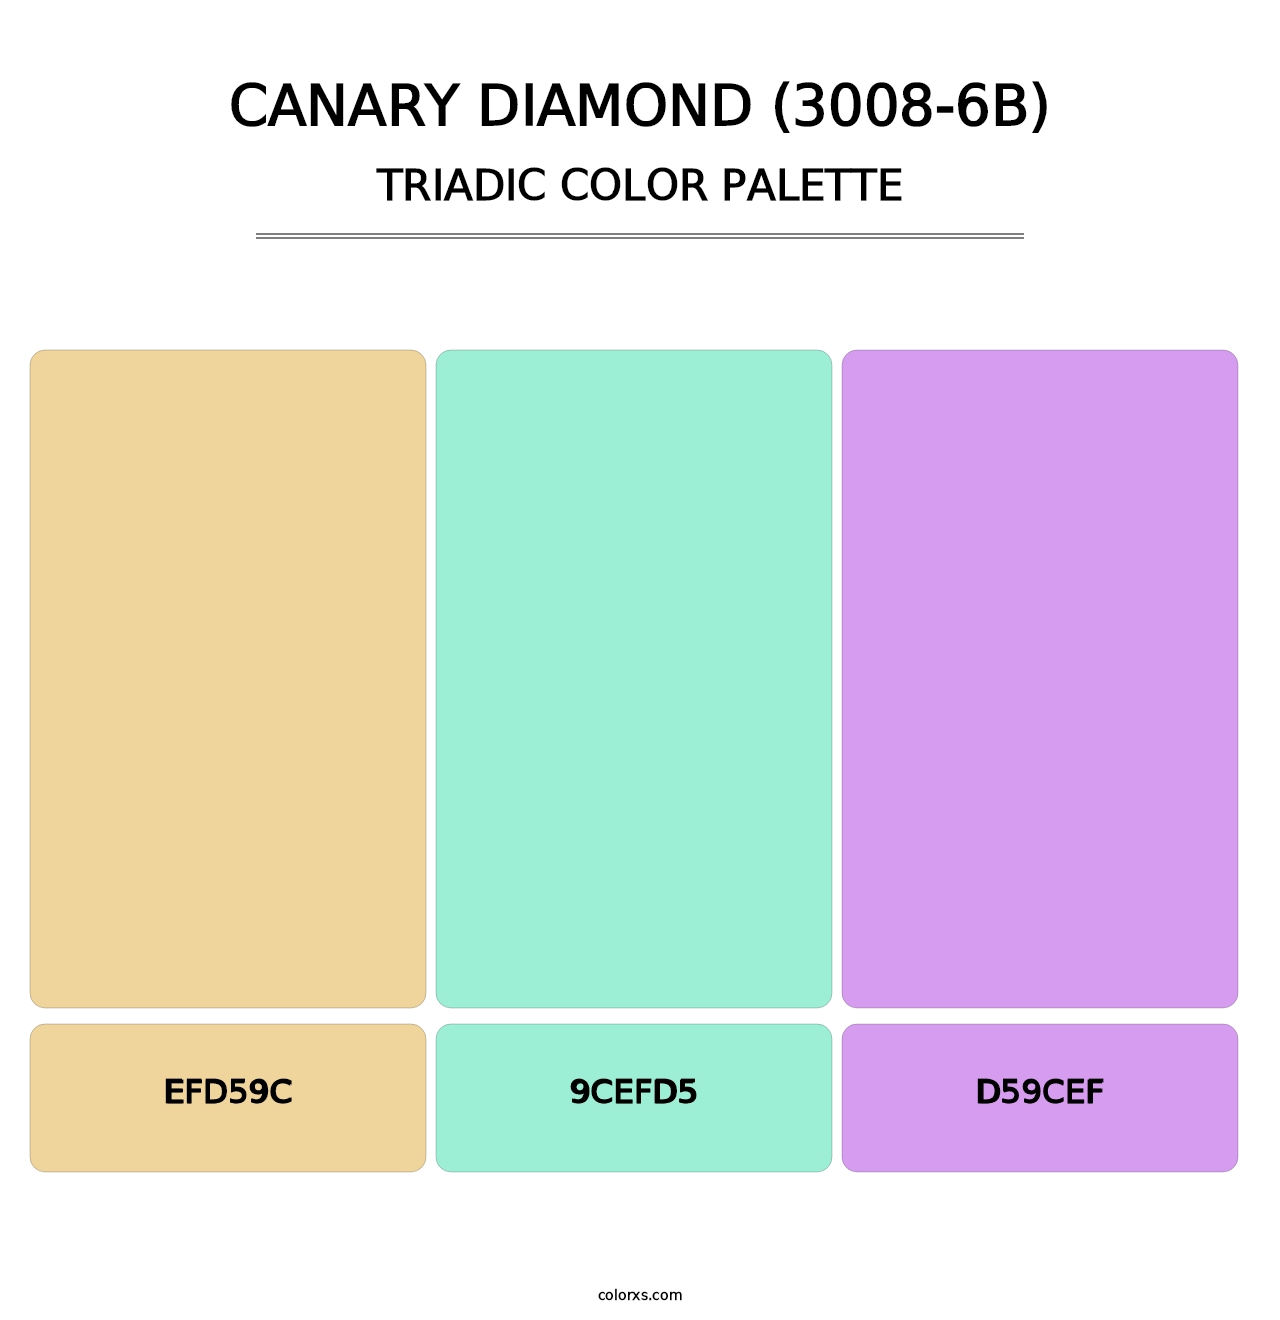 Canary Diamond (3008-6B) - Triadic Color Palette